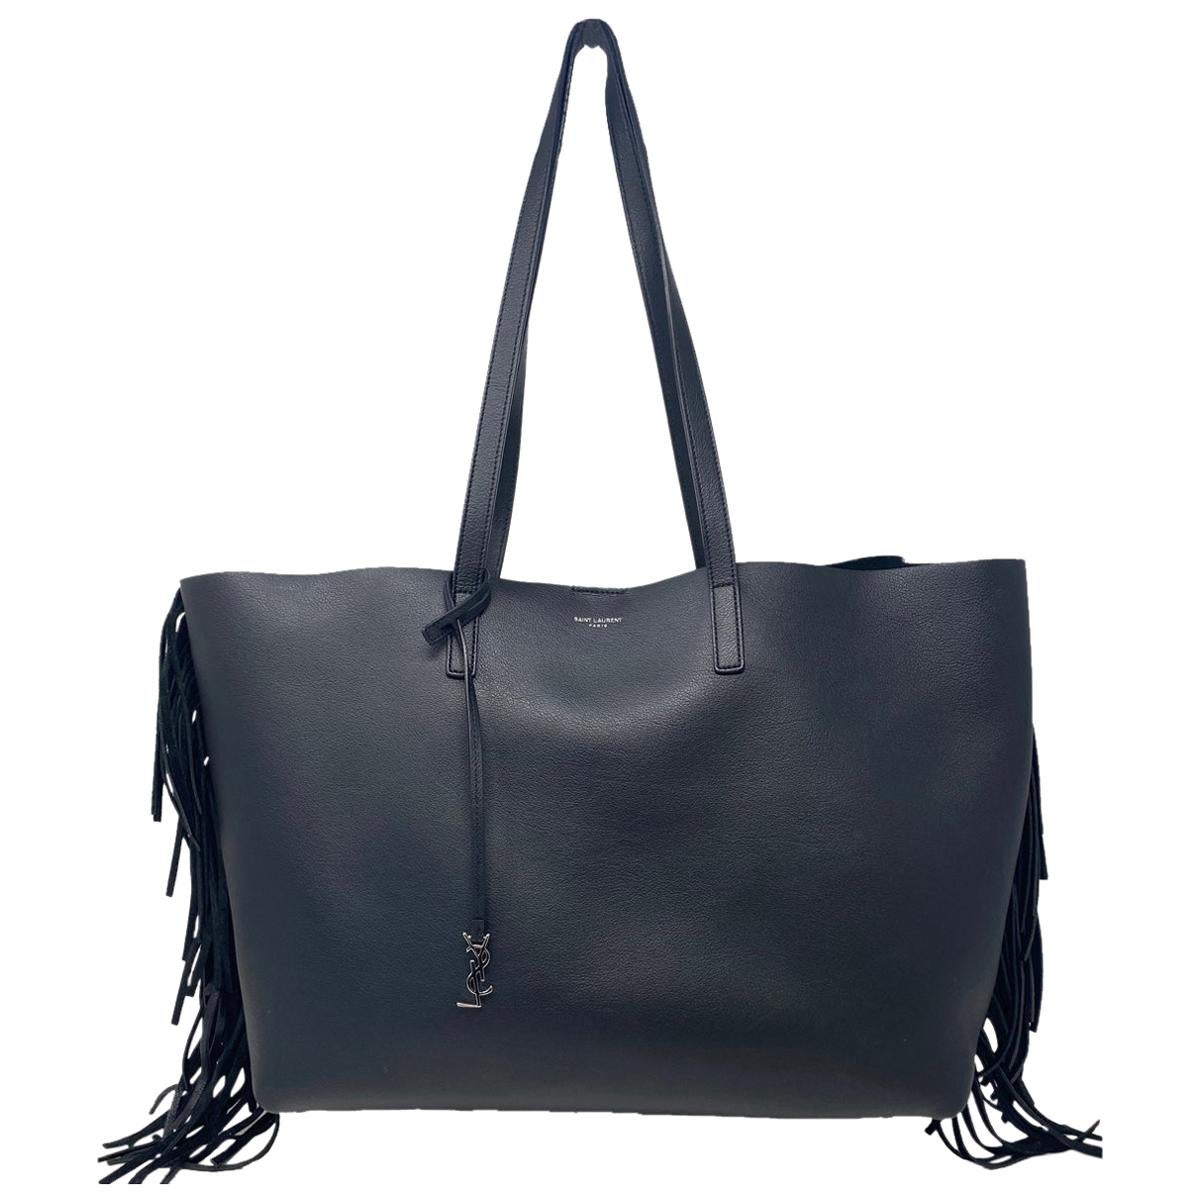 YSL Yves Saint Laurent Fringe Black Leather Tote Handbag For Sale